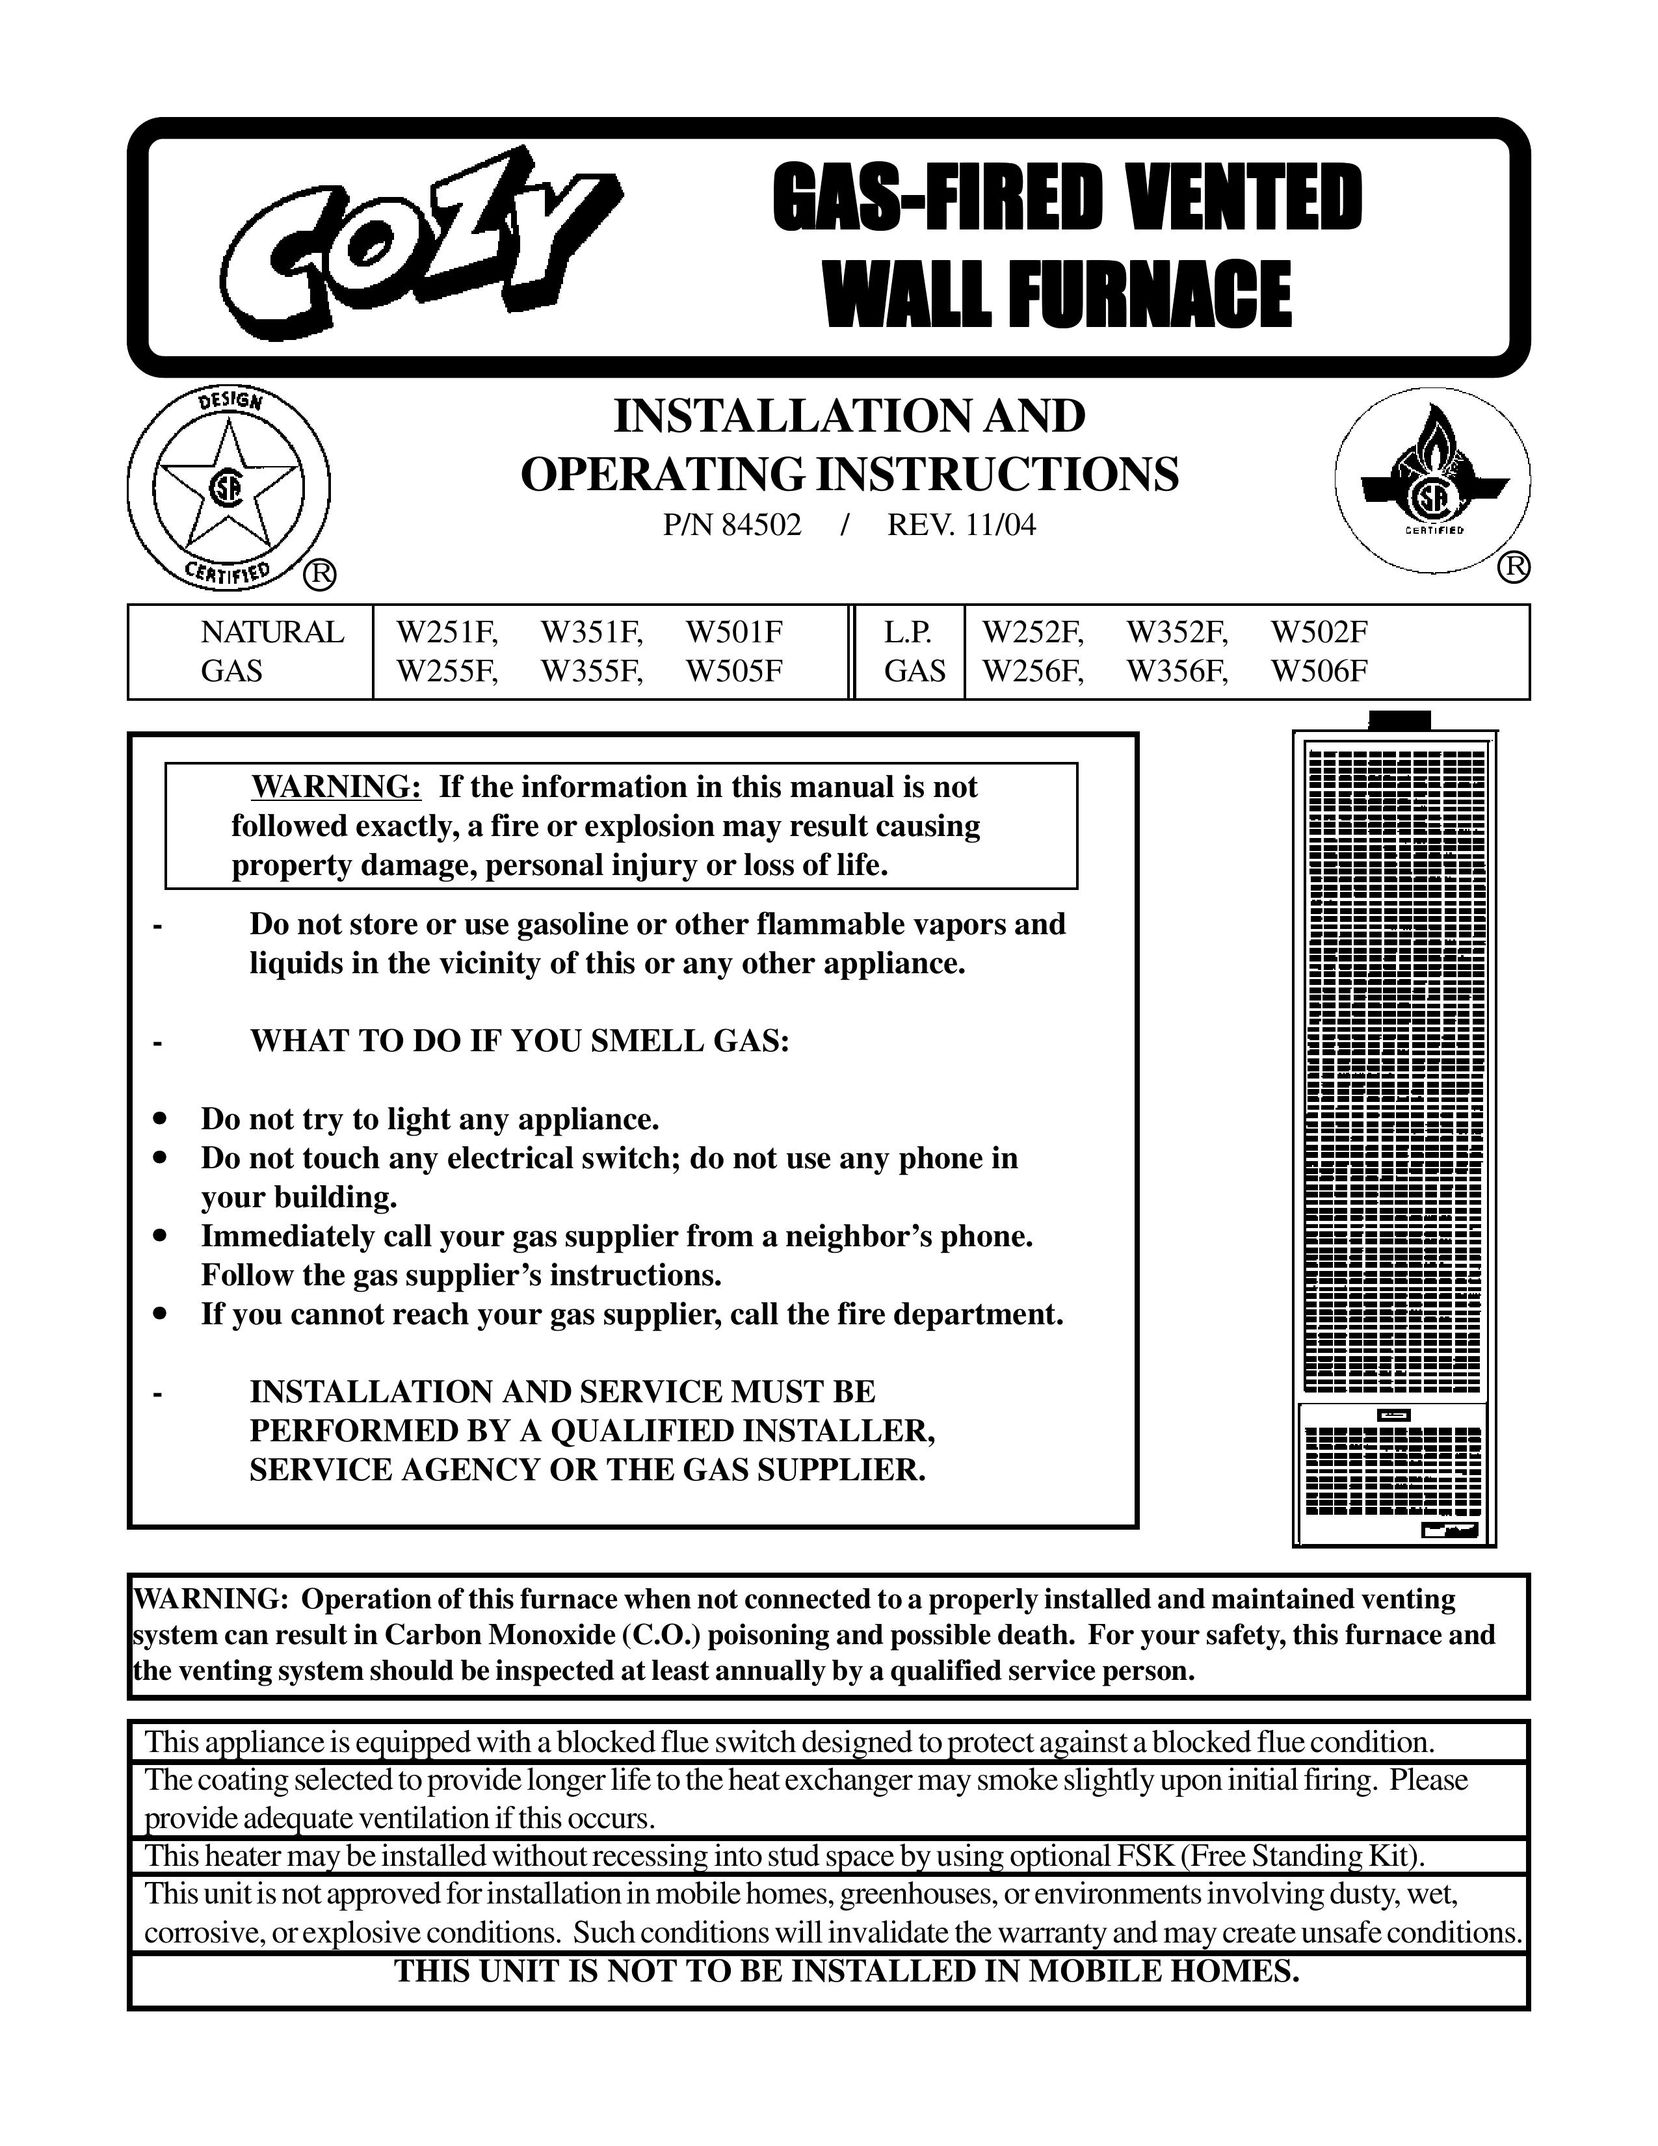 Louisville Tin and Stove W506 Furnace User Manual